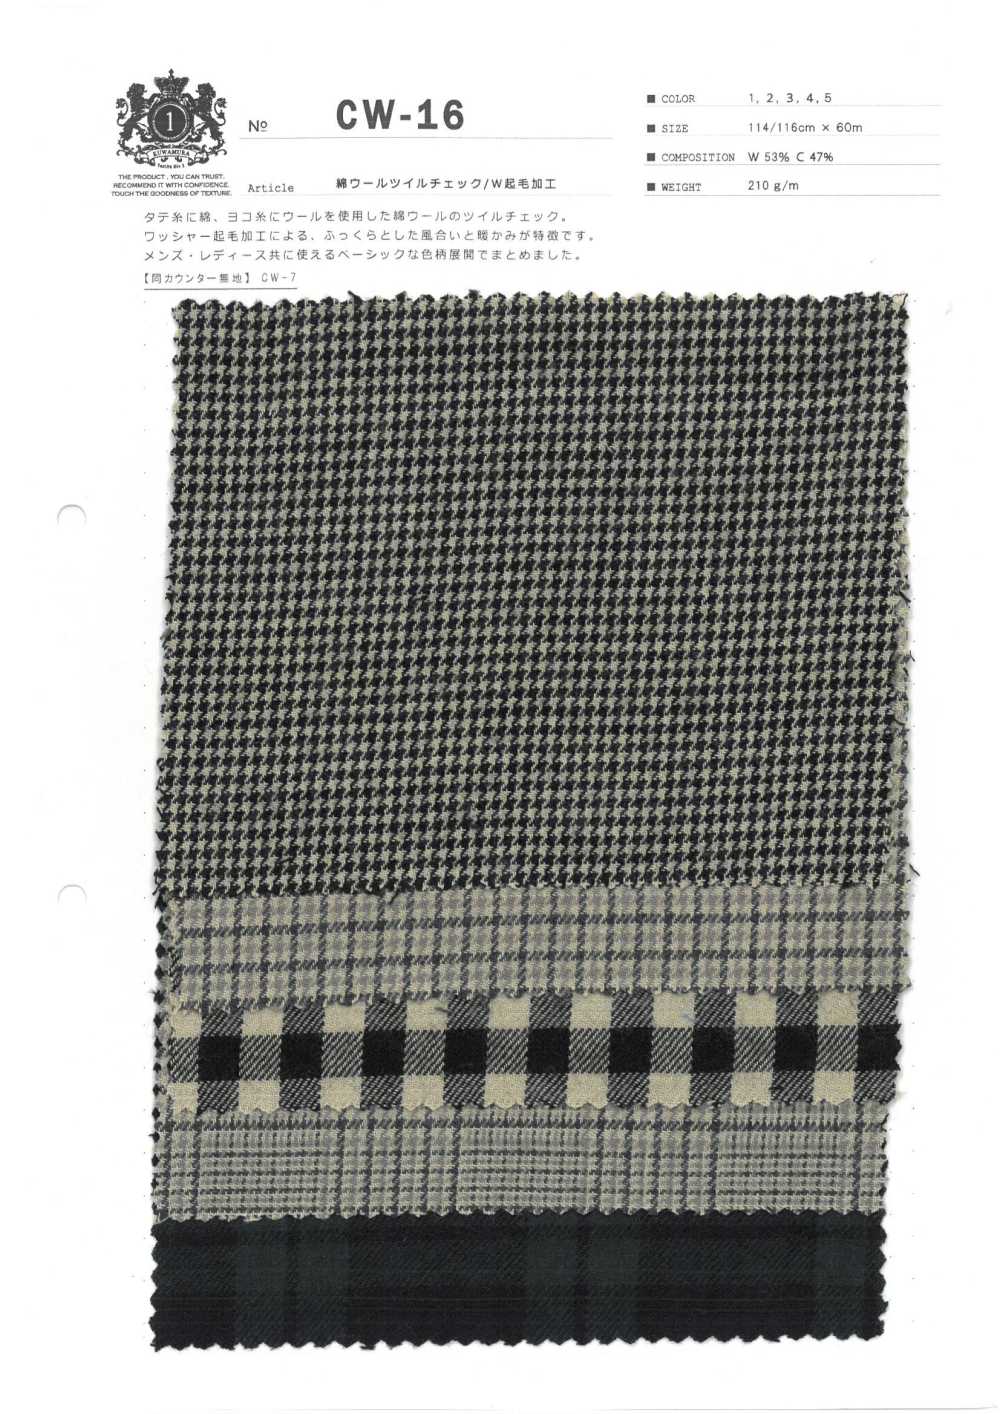 CW-16 Sarga De Algodón Y Lana A Cuadros/W Fuzzy Processing[Fabrica Textil] Fibra Kuwamura